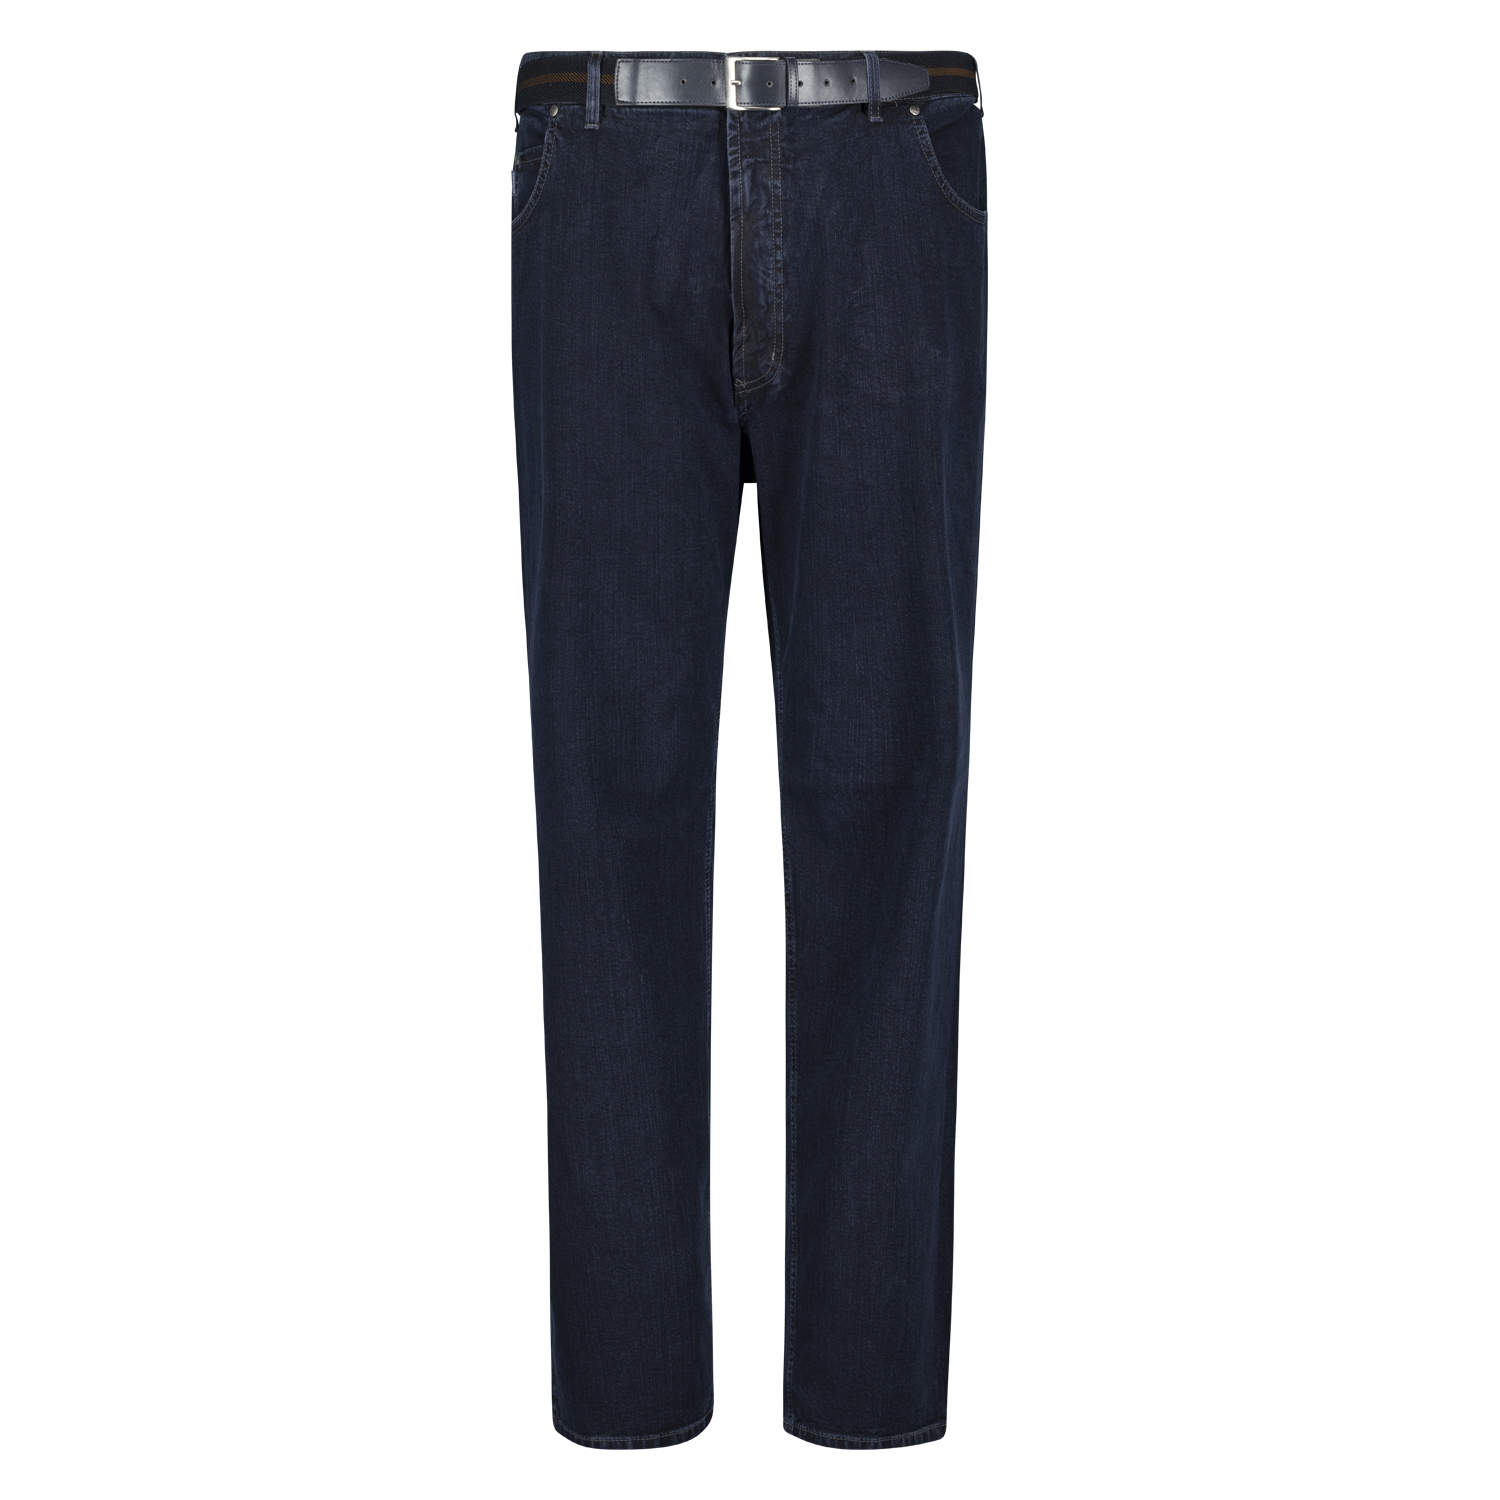 Five pocket jeans model "Peter" by Pioneer in oversize dark blue (regular rise): 56 - 74